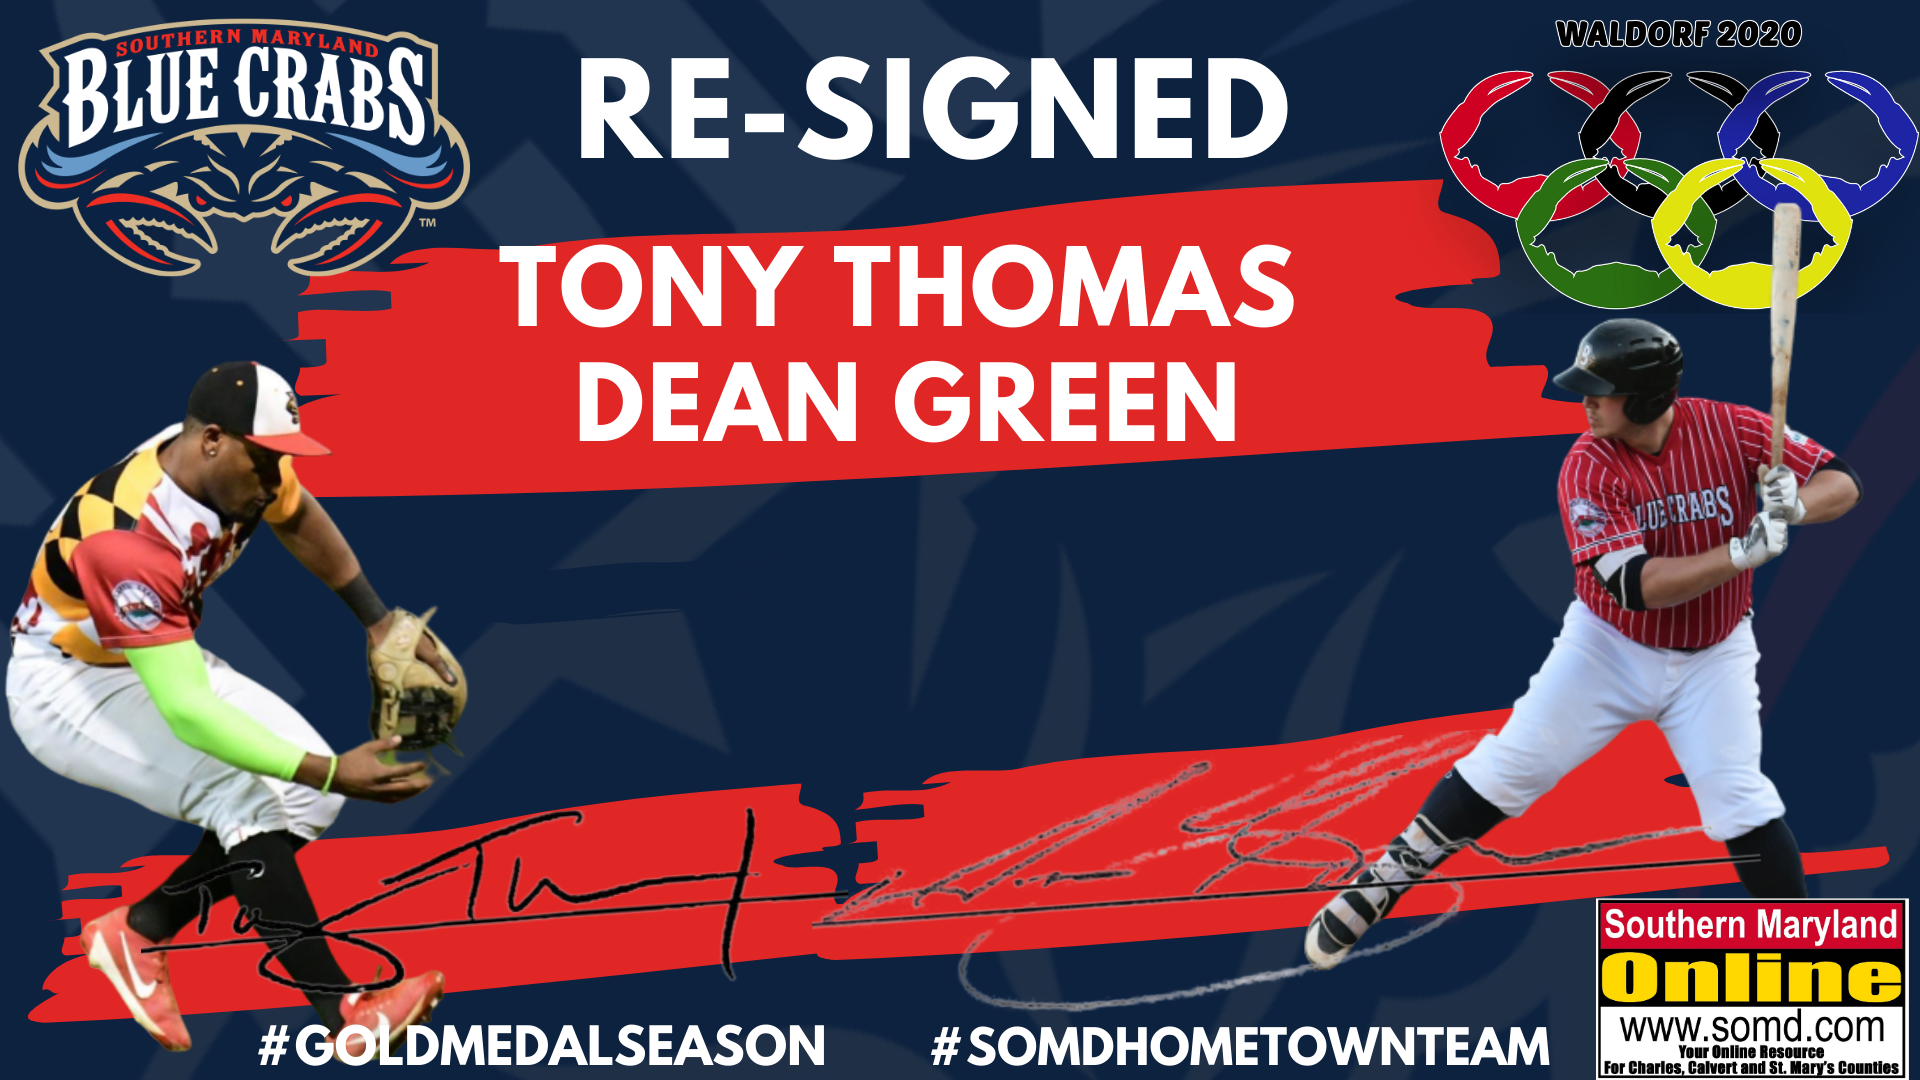 Blue Crabs Re-Sign Tony Thomas, Dean Green